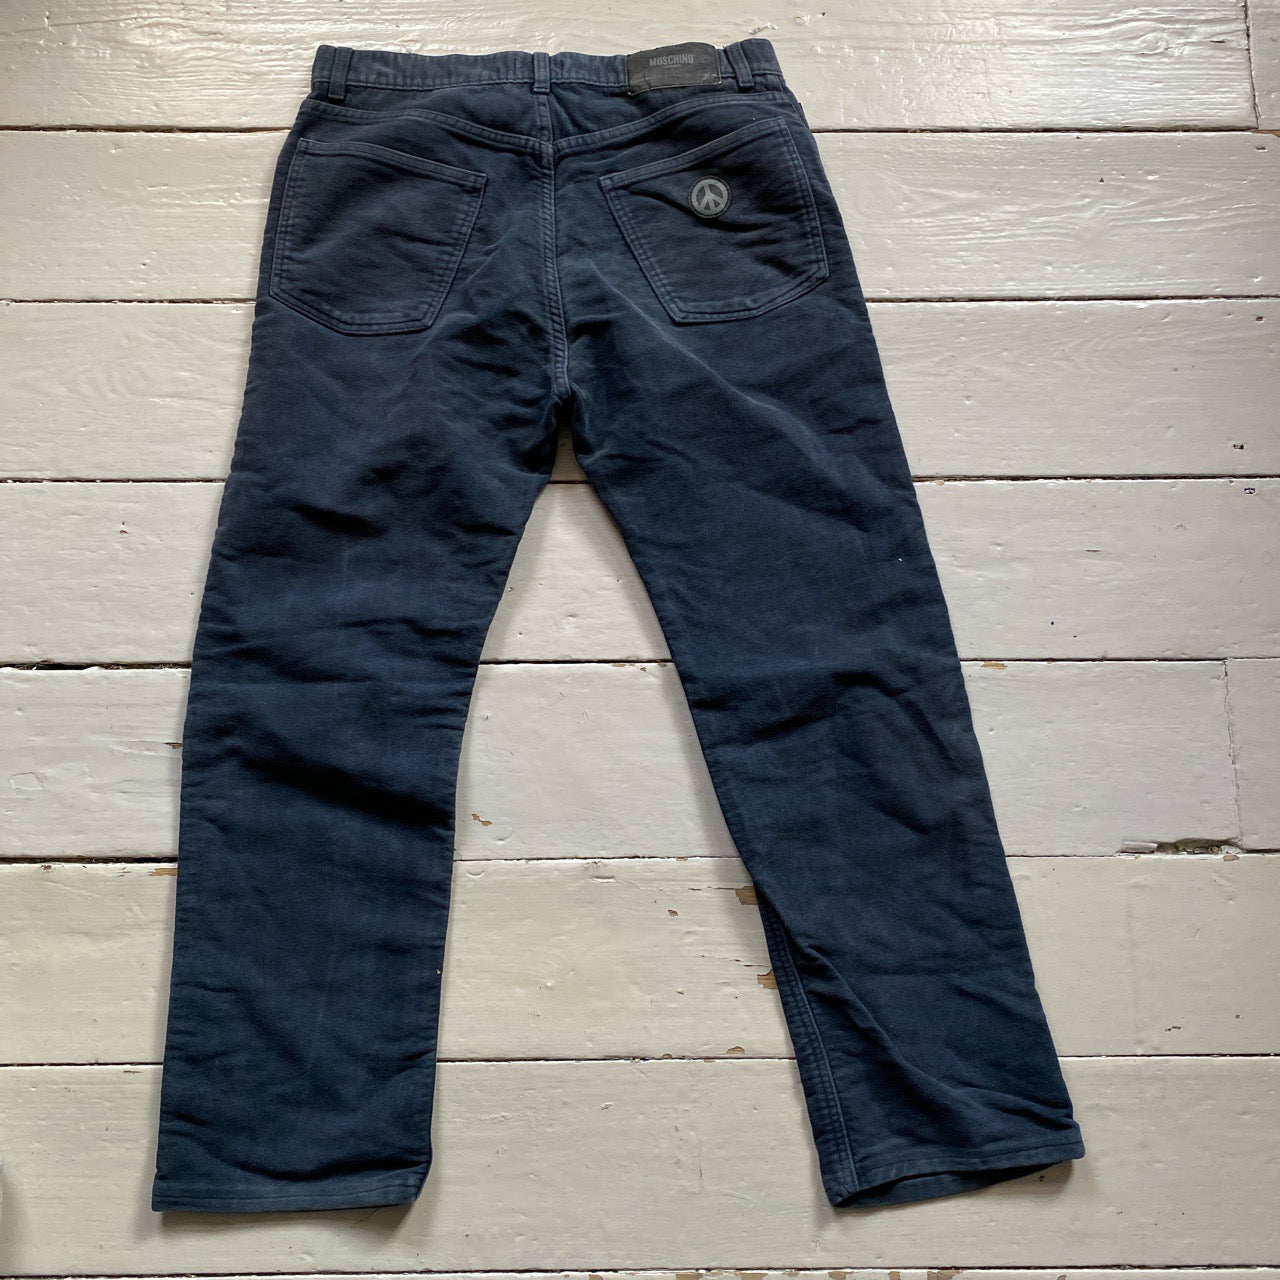 Moschino Vintage Velour Jeans (32/28)